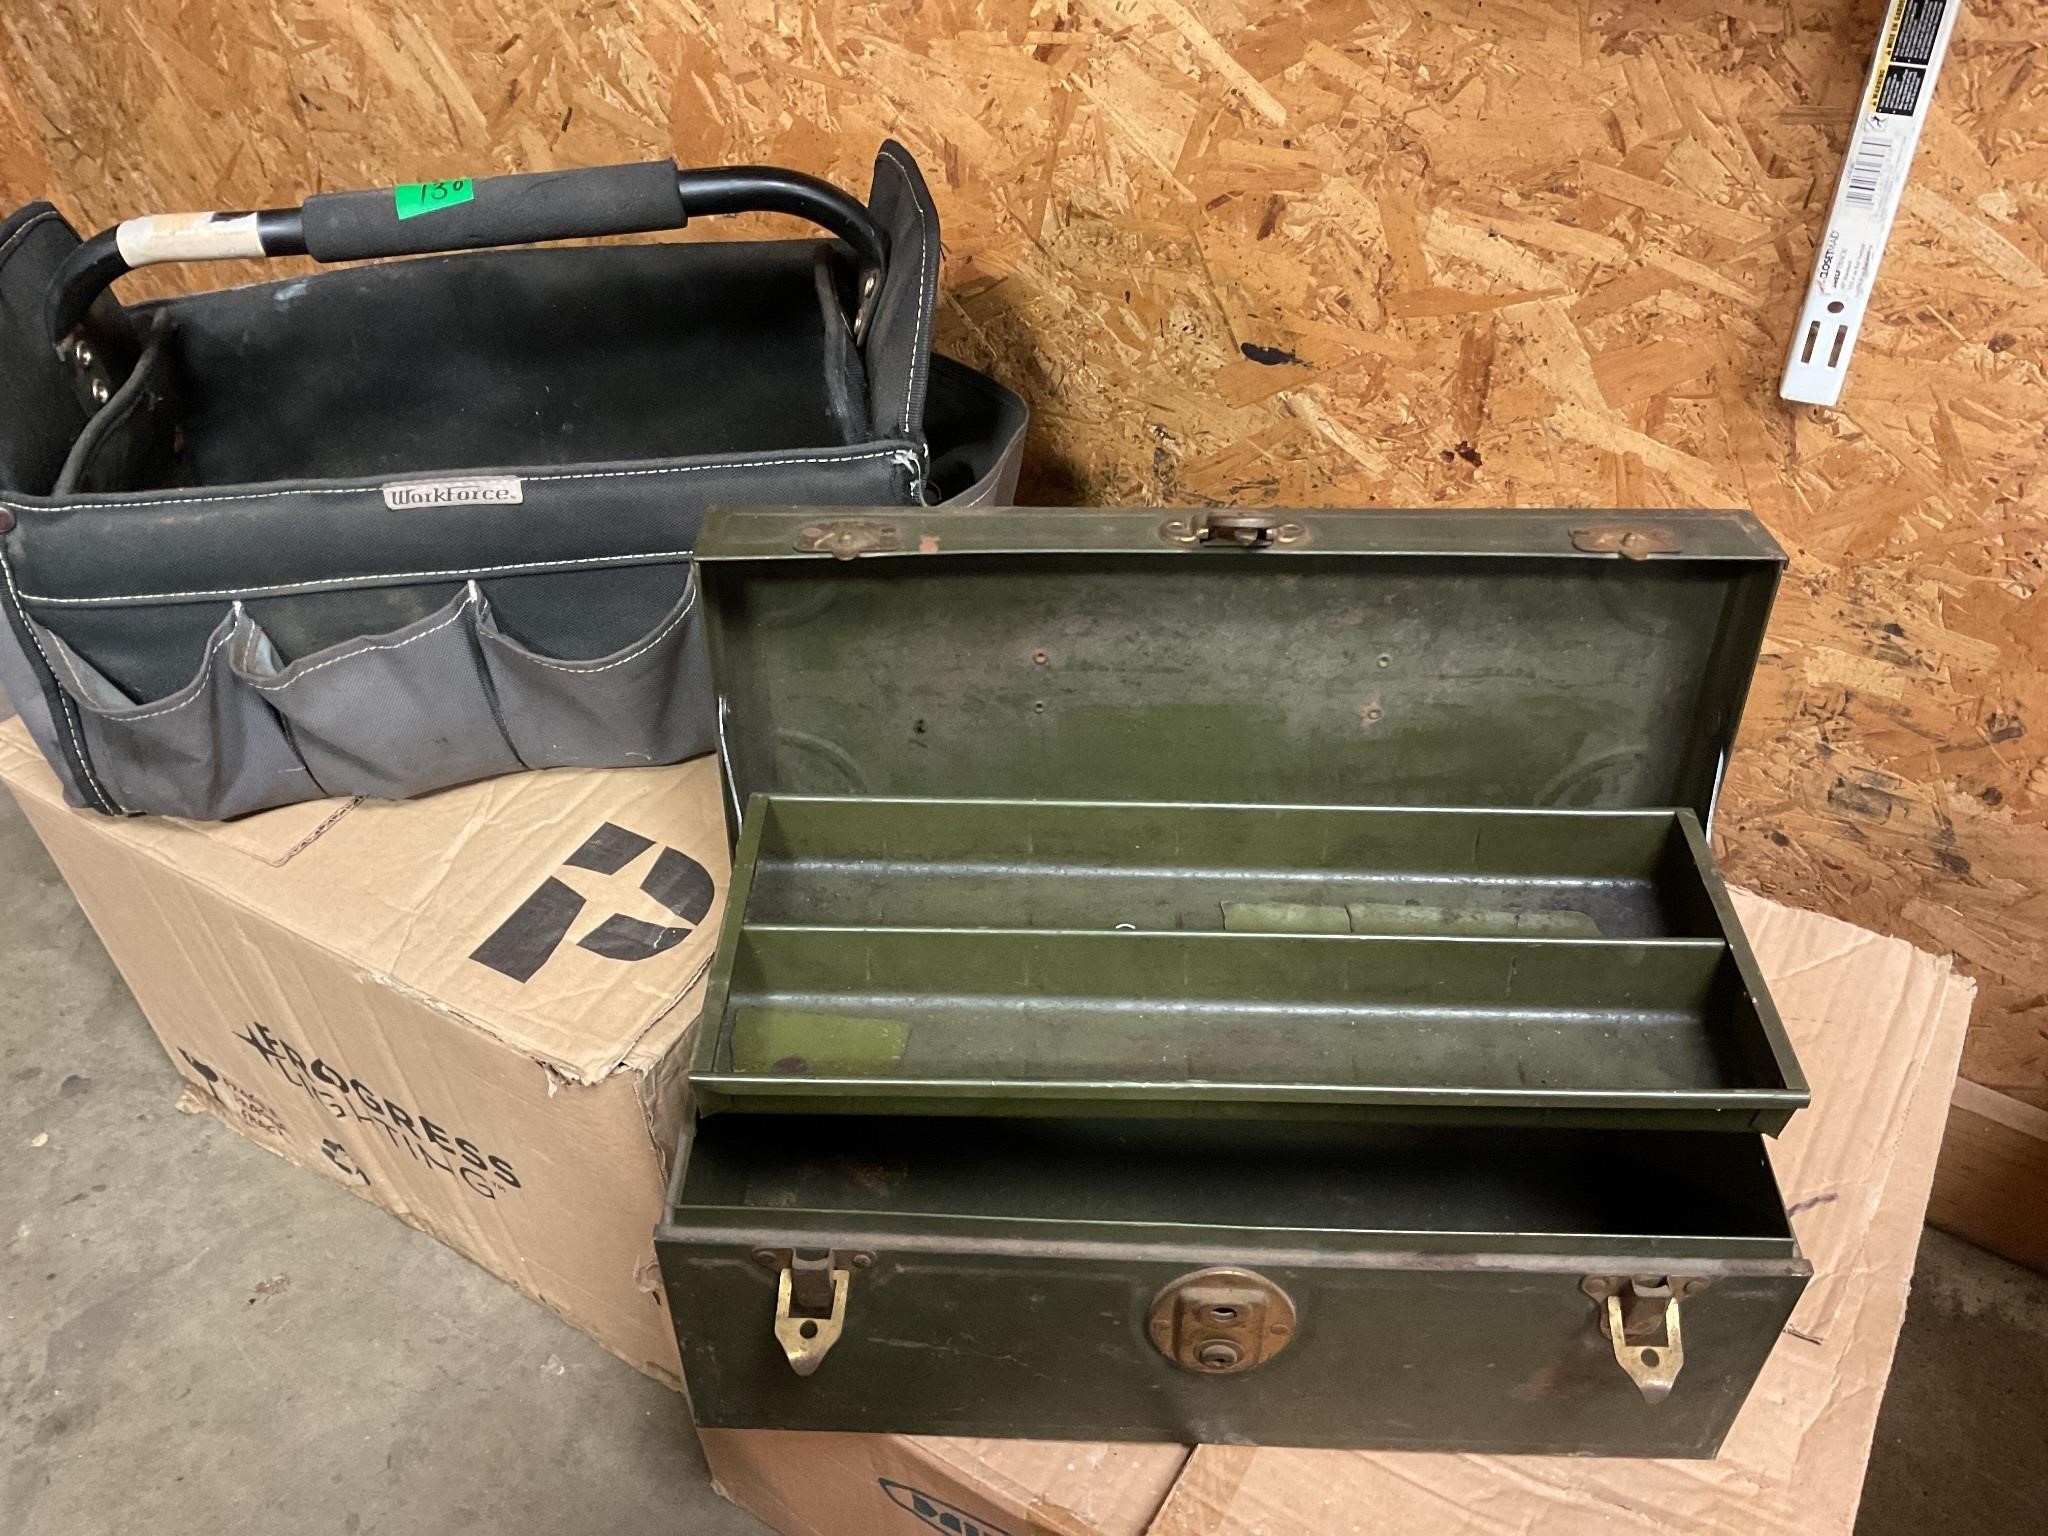 Metal tool box and WorkForce tool bag